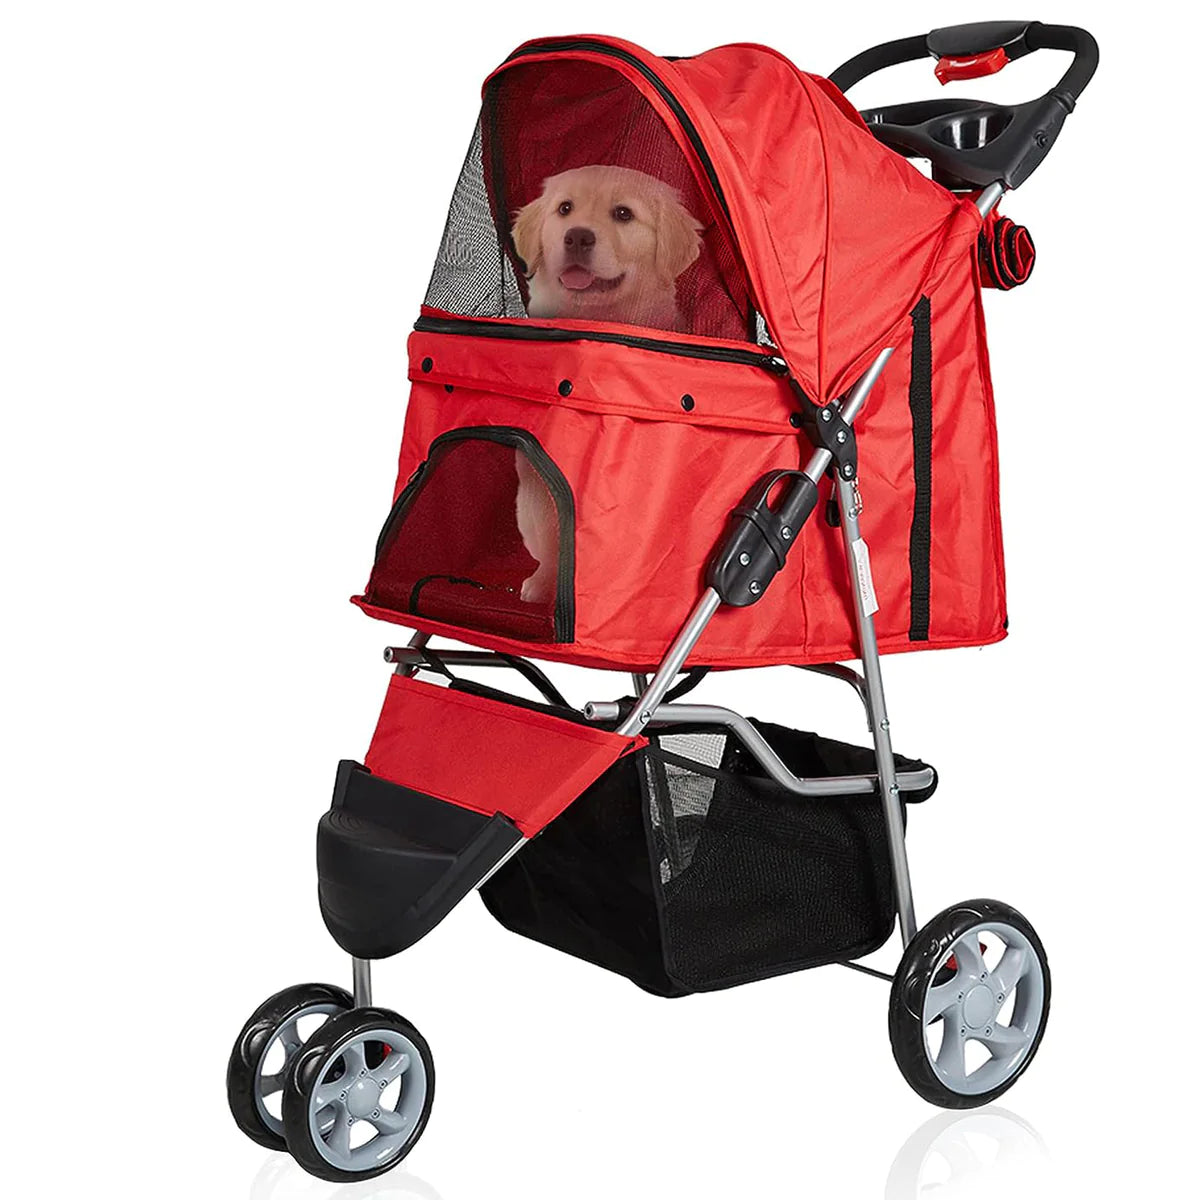 Dog Pet Jogger Stroller Folding Travel Carrier Cart for Small Cat Puppy, 3 Wheels